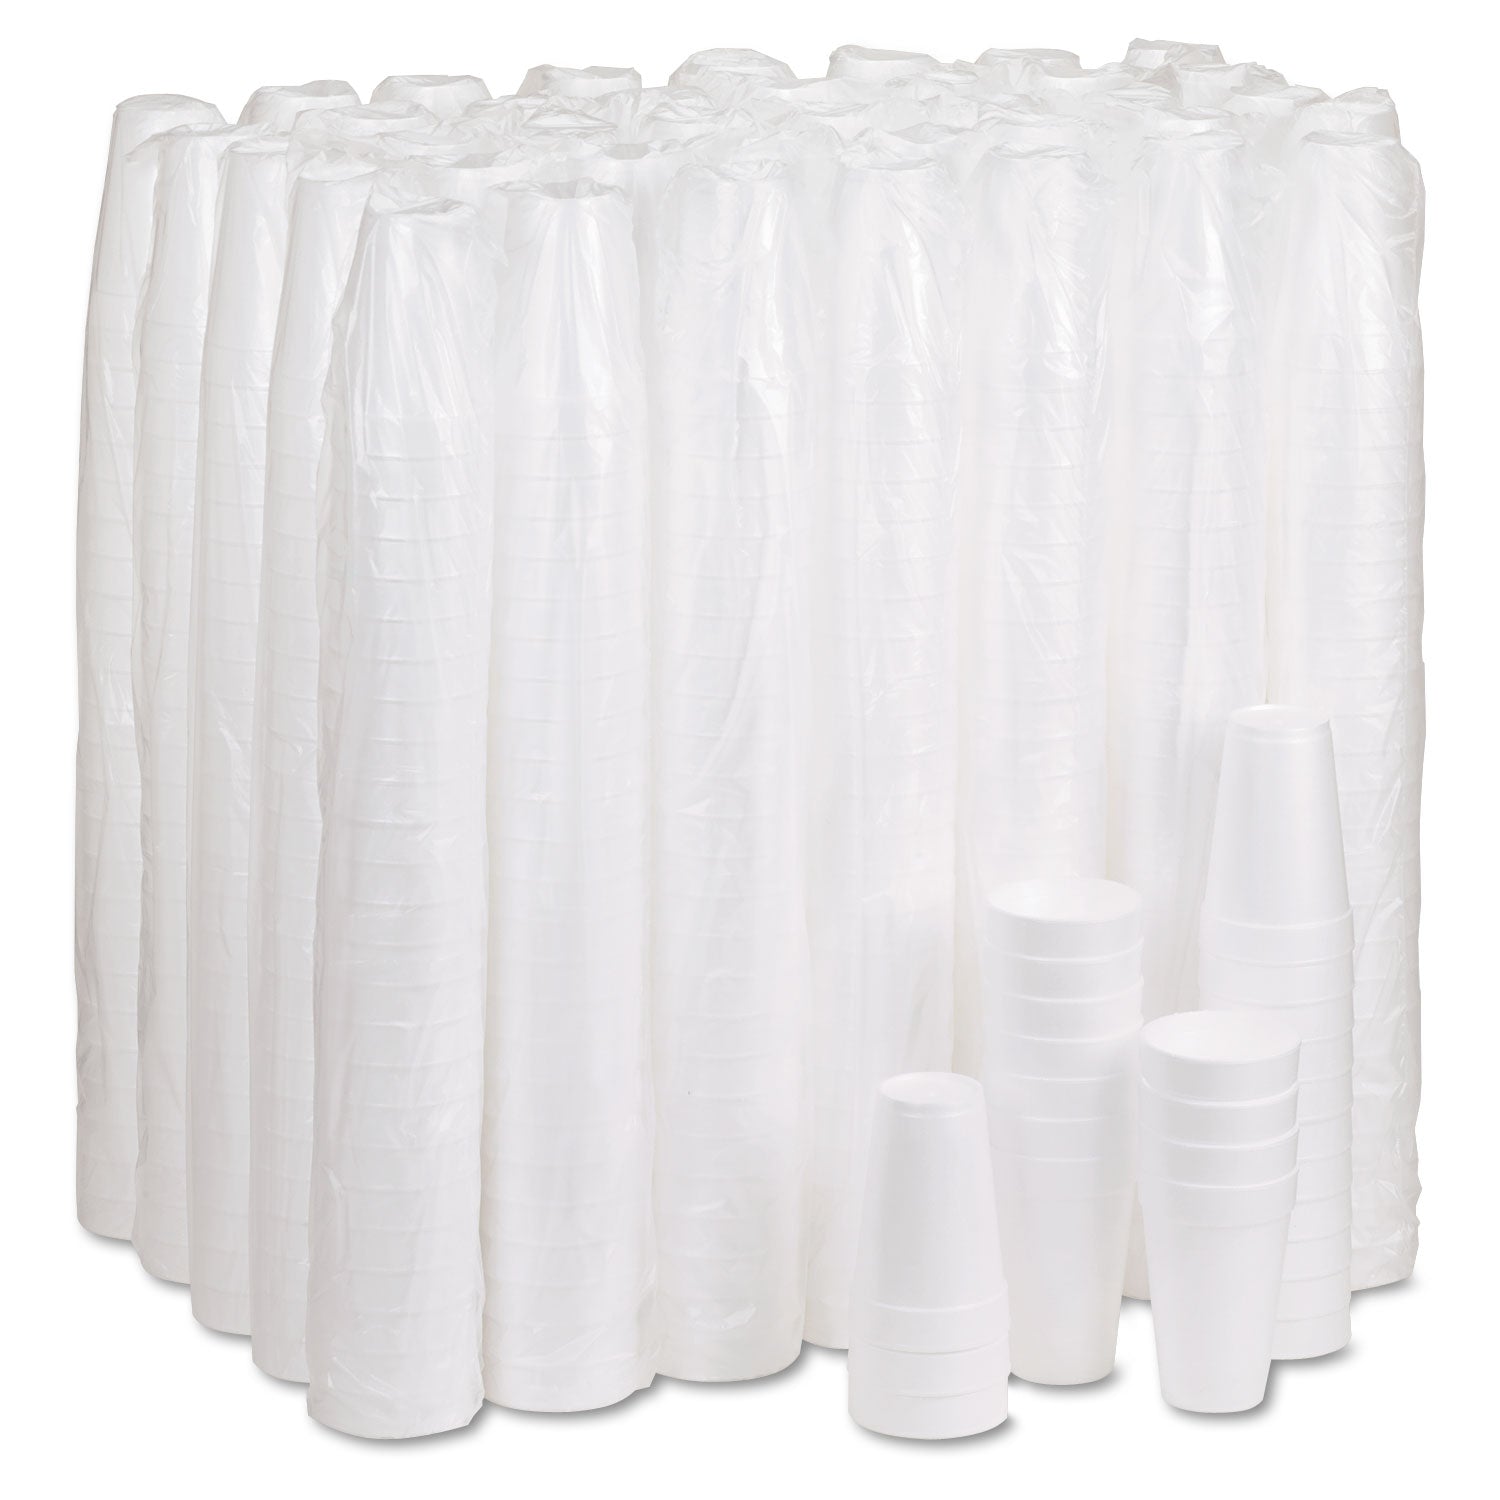 Foam Drink Cups, 16 oz, White, 25/Bag, 40 Bags/Carton - 